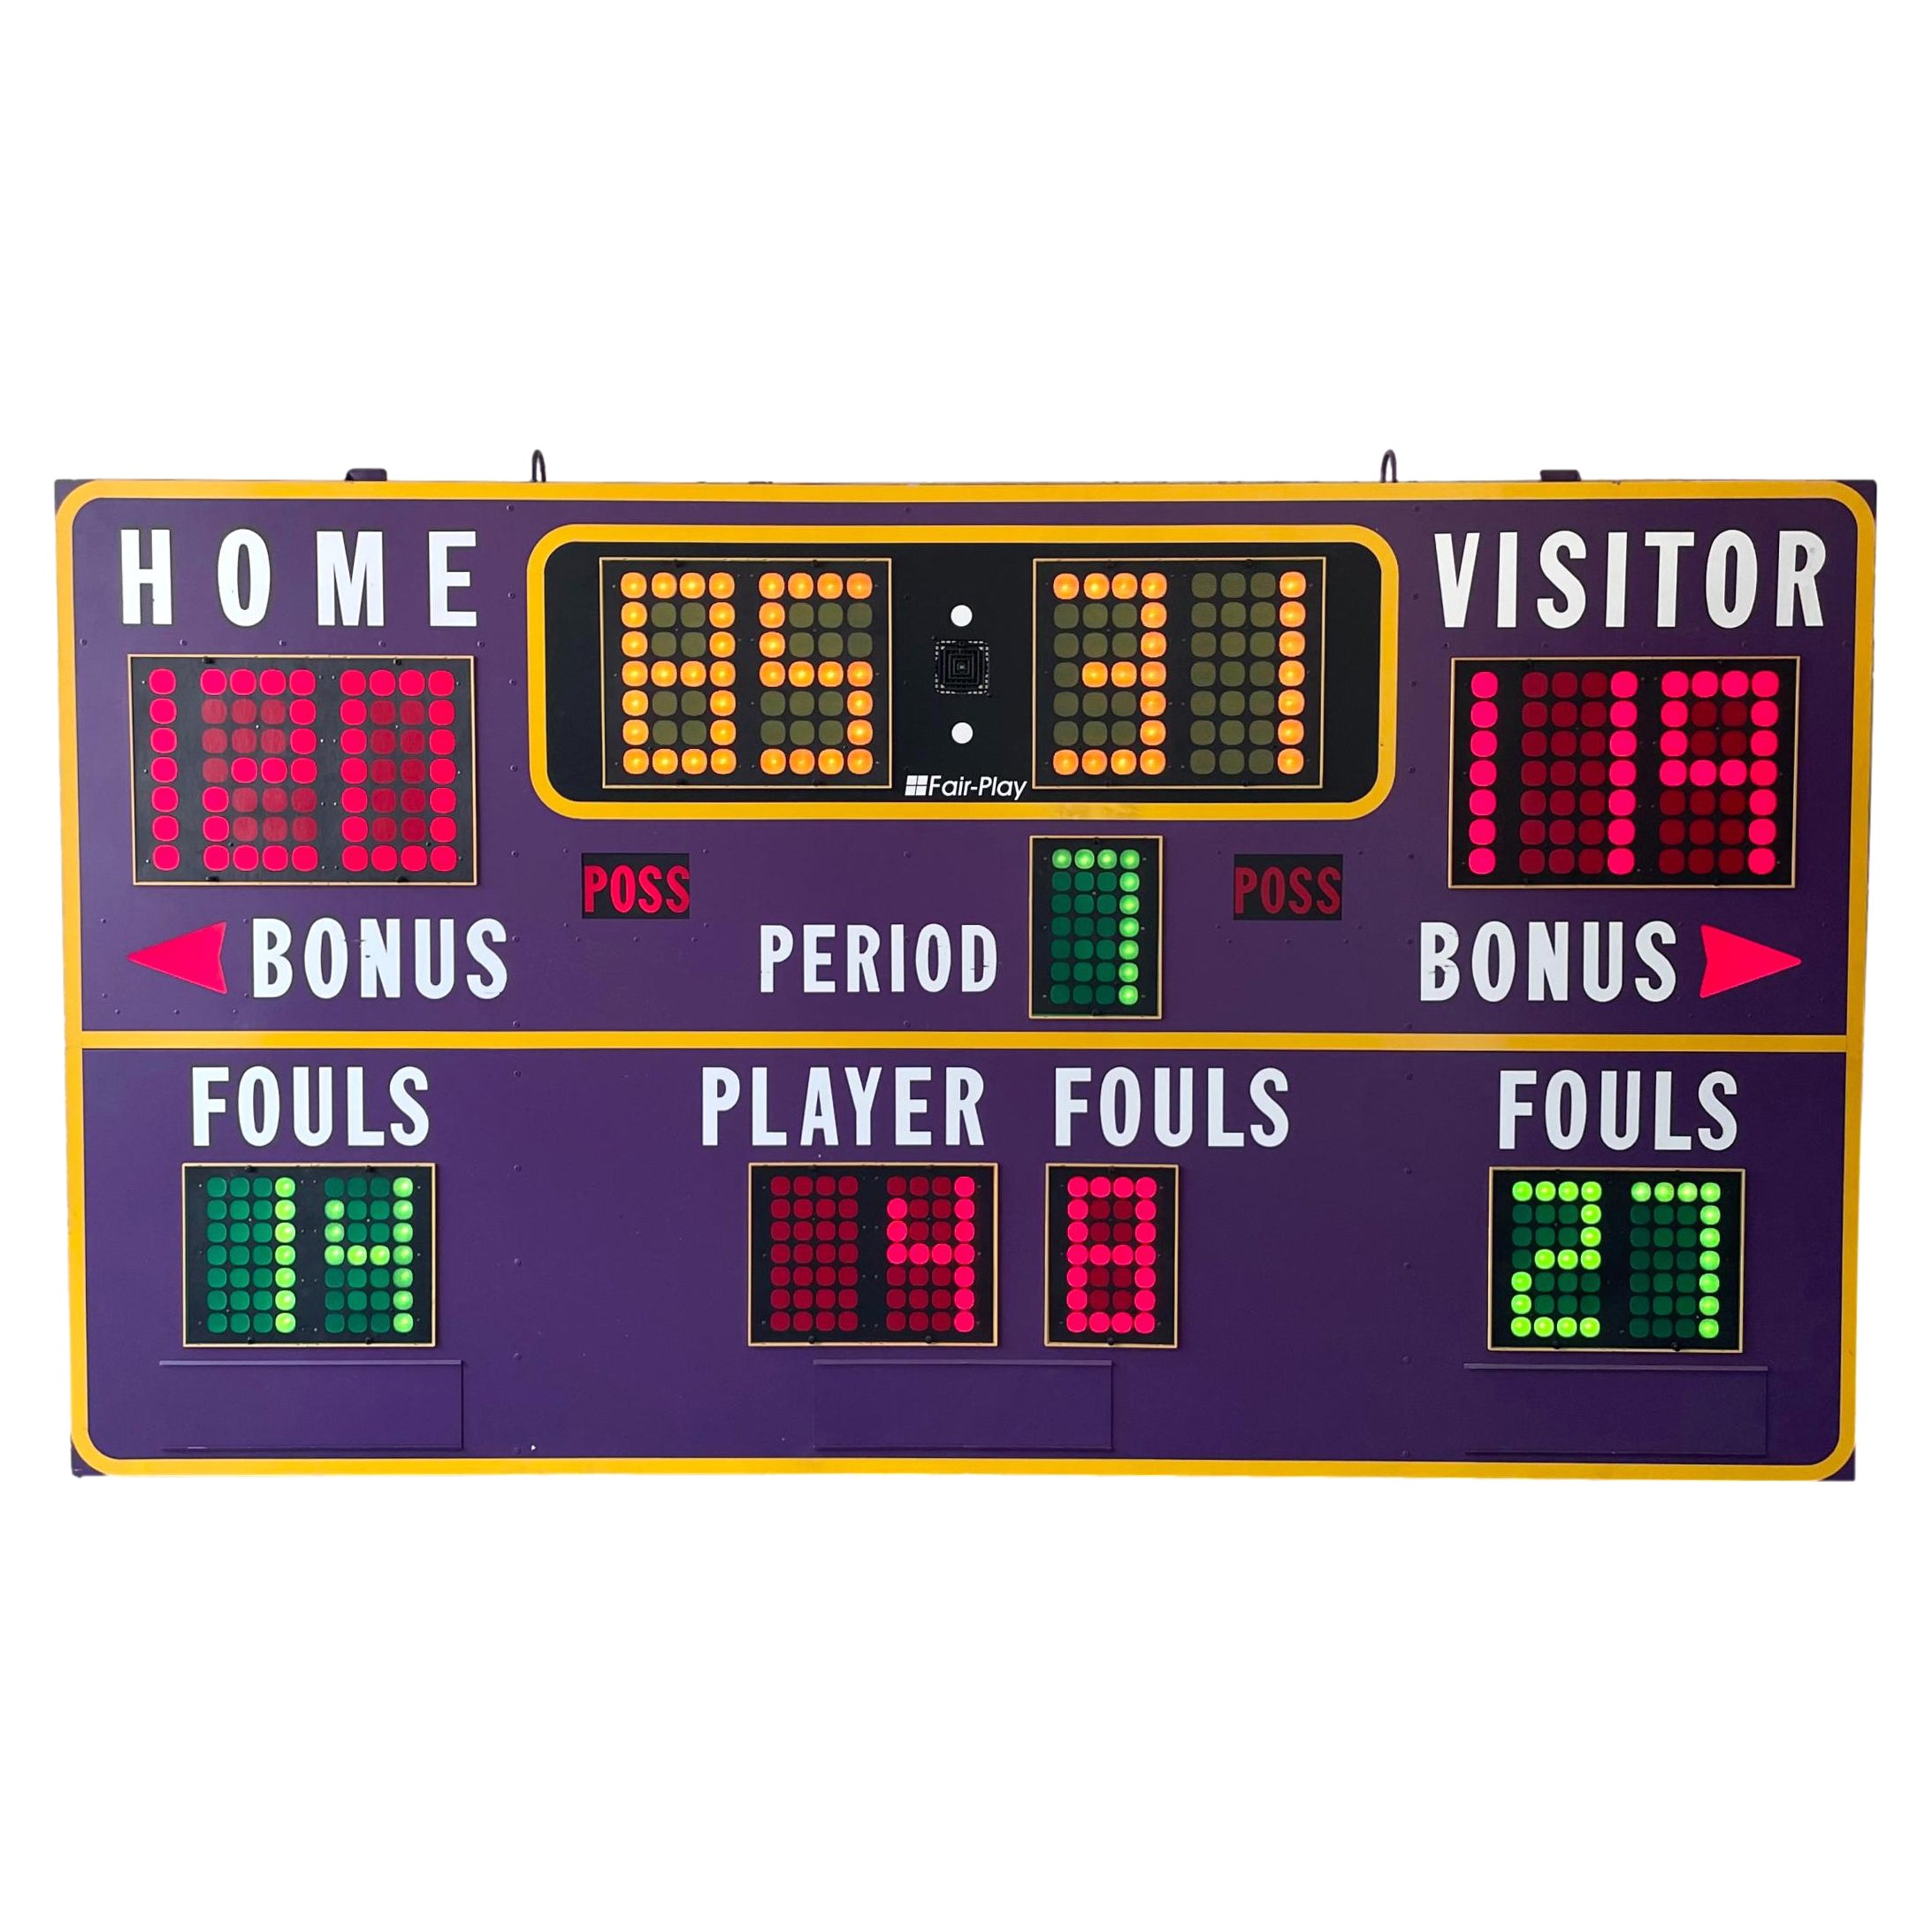 Lakers Practice Facility Basketball Scoreboard